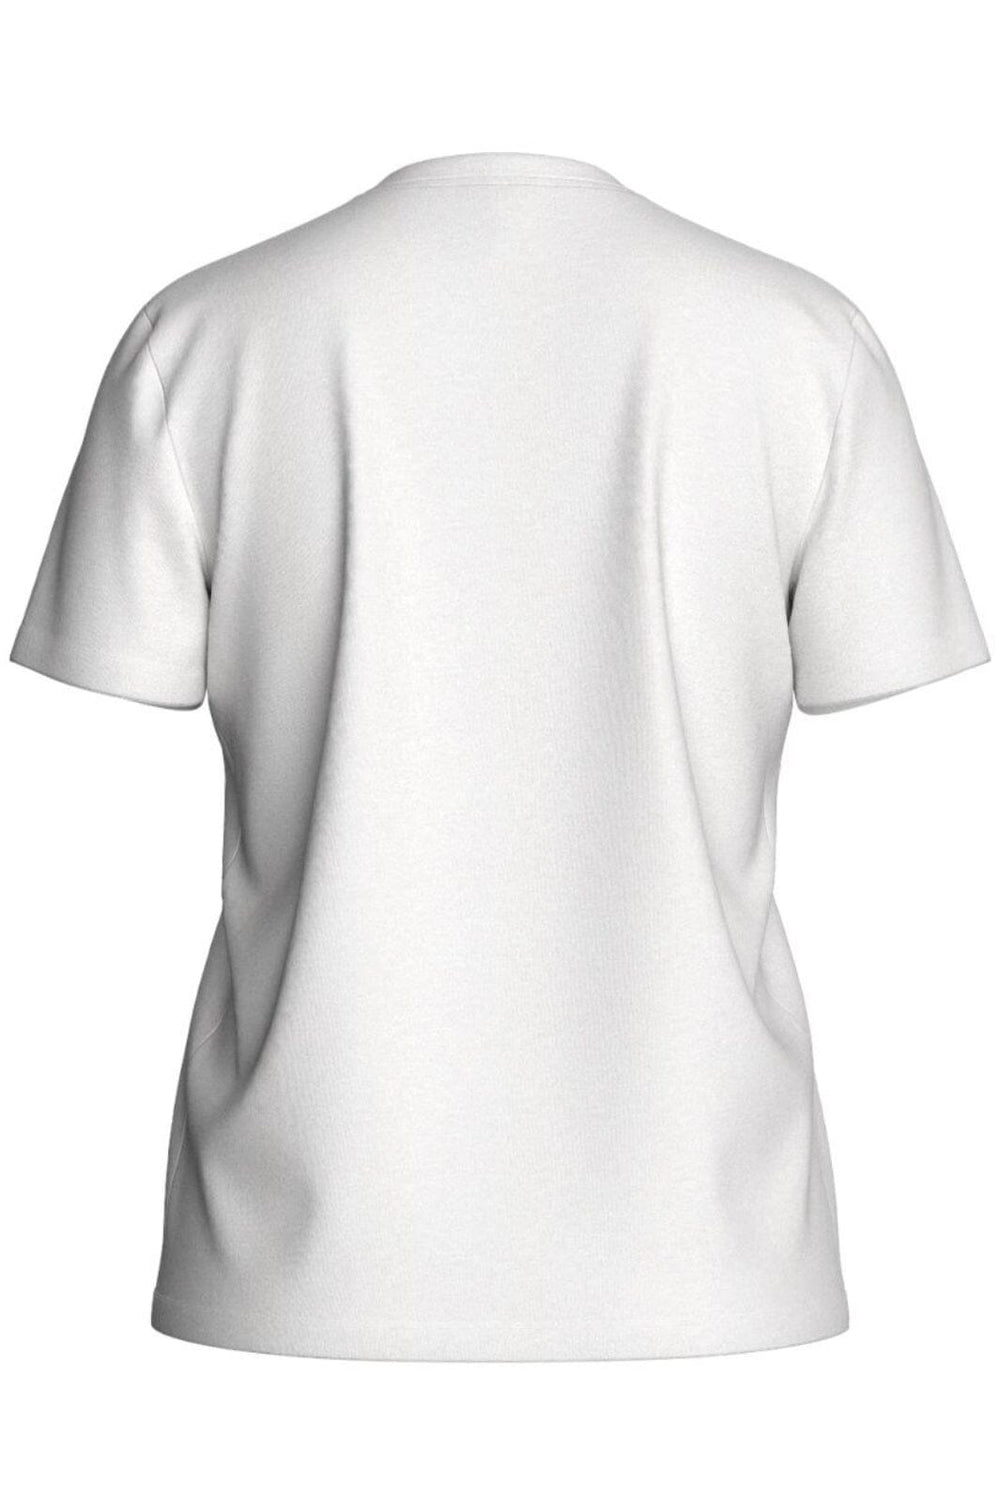 Only - Onlkita Life Reg S/S Panda Top Cc - 4432216 Bright White Panda T-shirts 